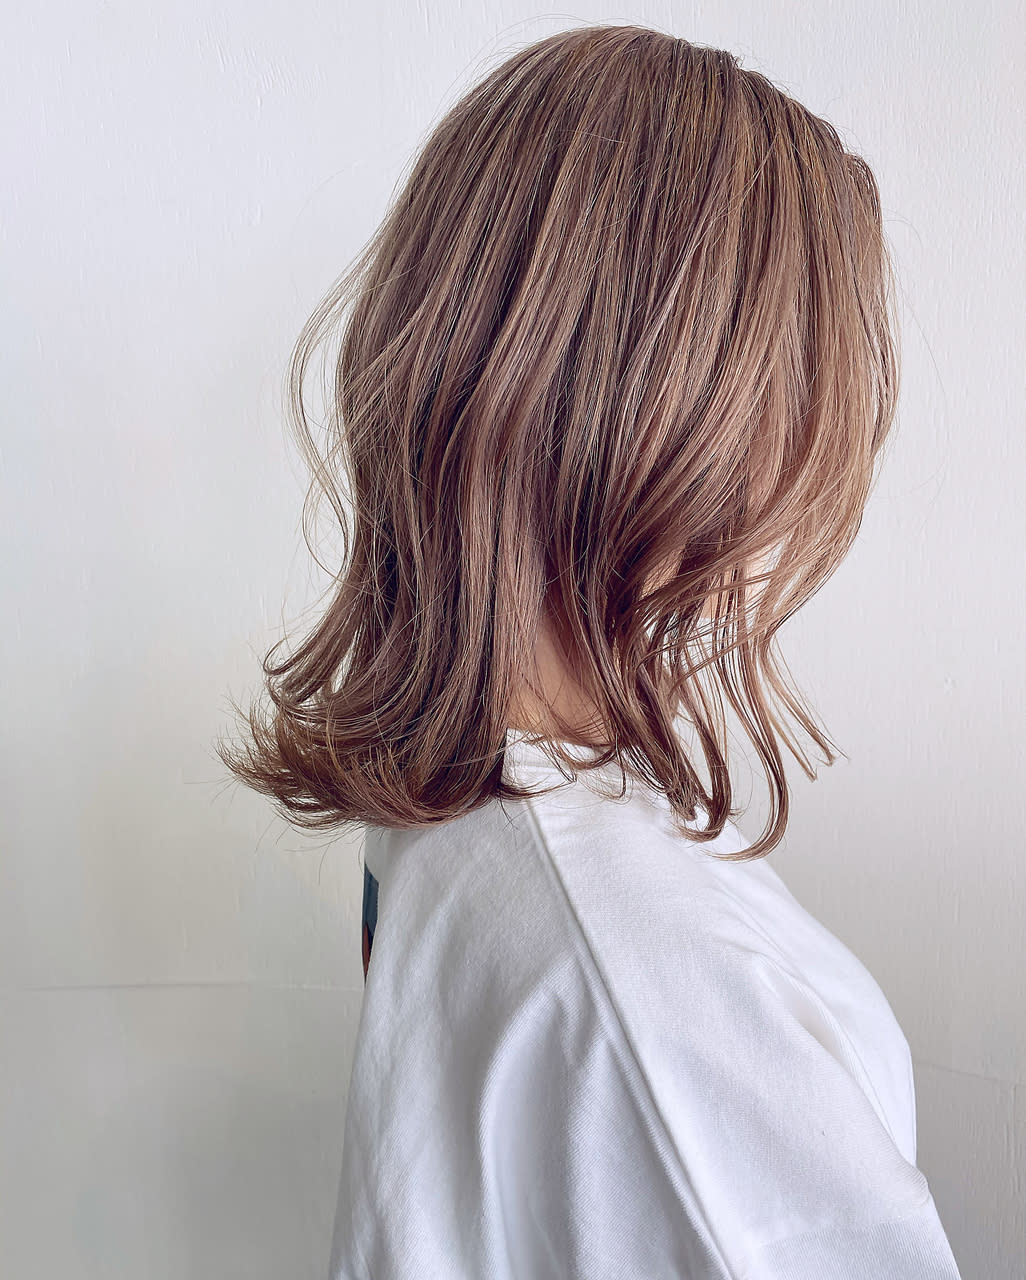 LOVEST KYOTO【ラベスト キョウト】のスタイル紹介。髪に動きや透明感が欲しい方にオススメミディアムヘア